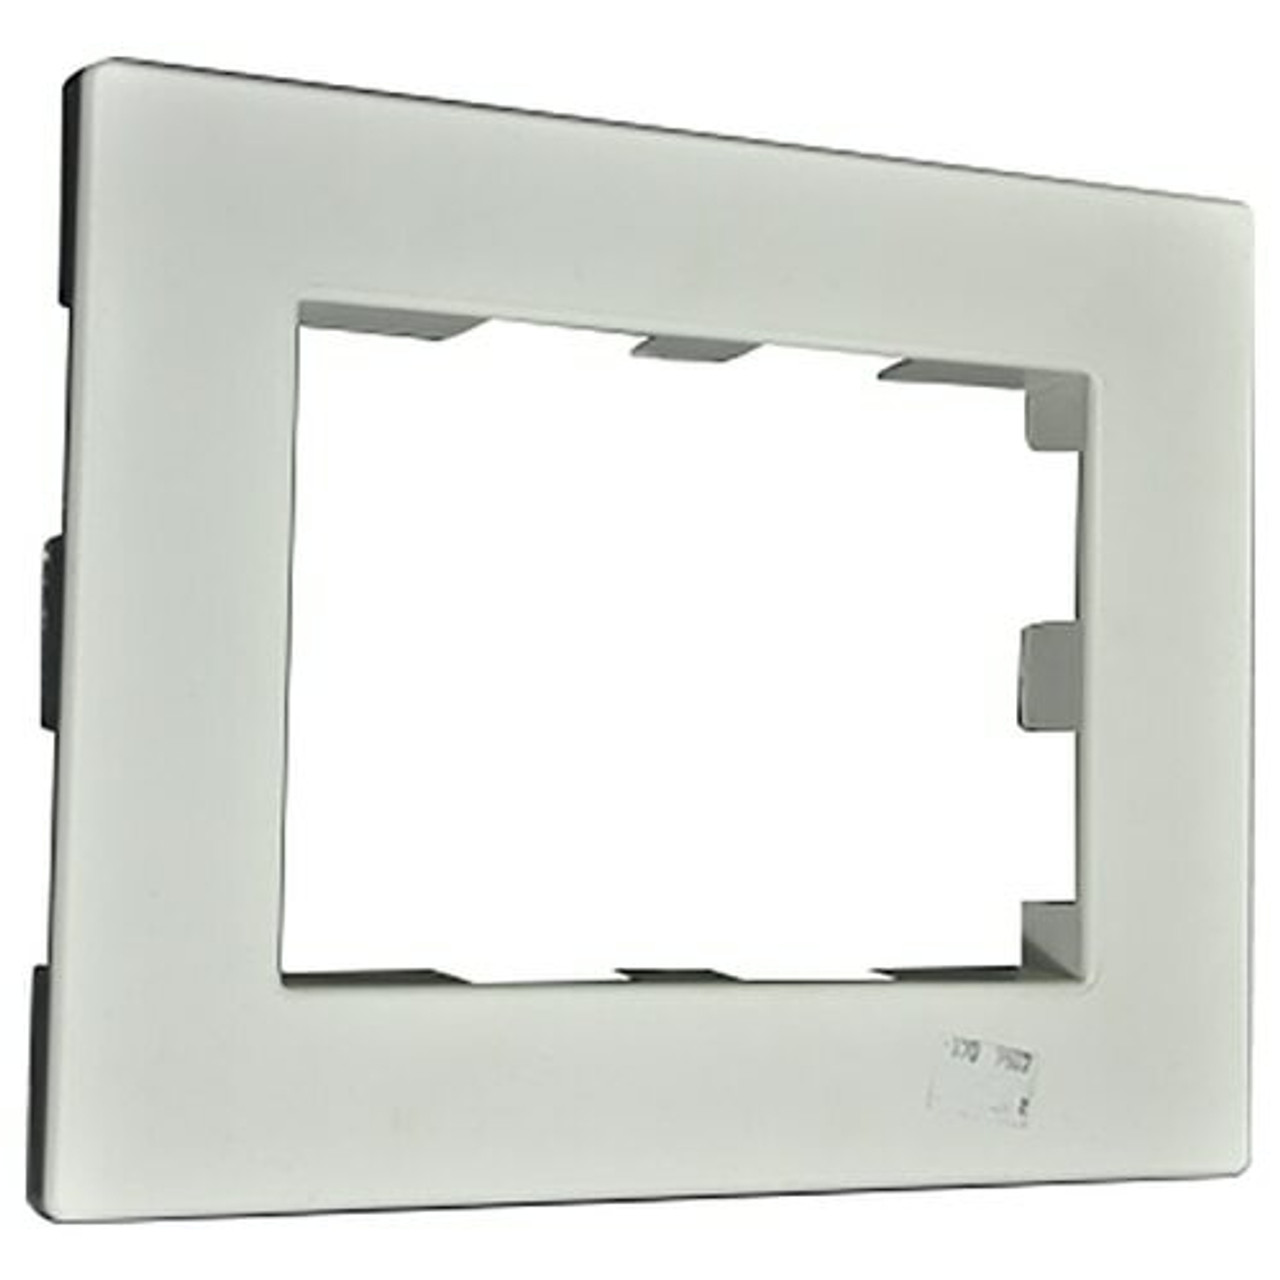 Trim Plate For Renegade Standard Skimmer - White